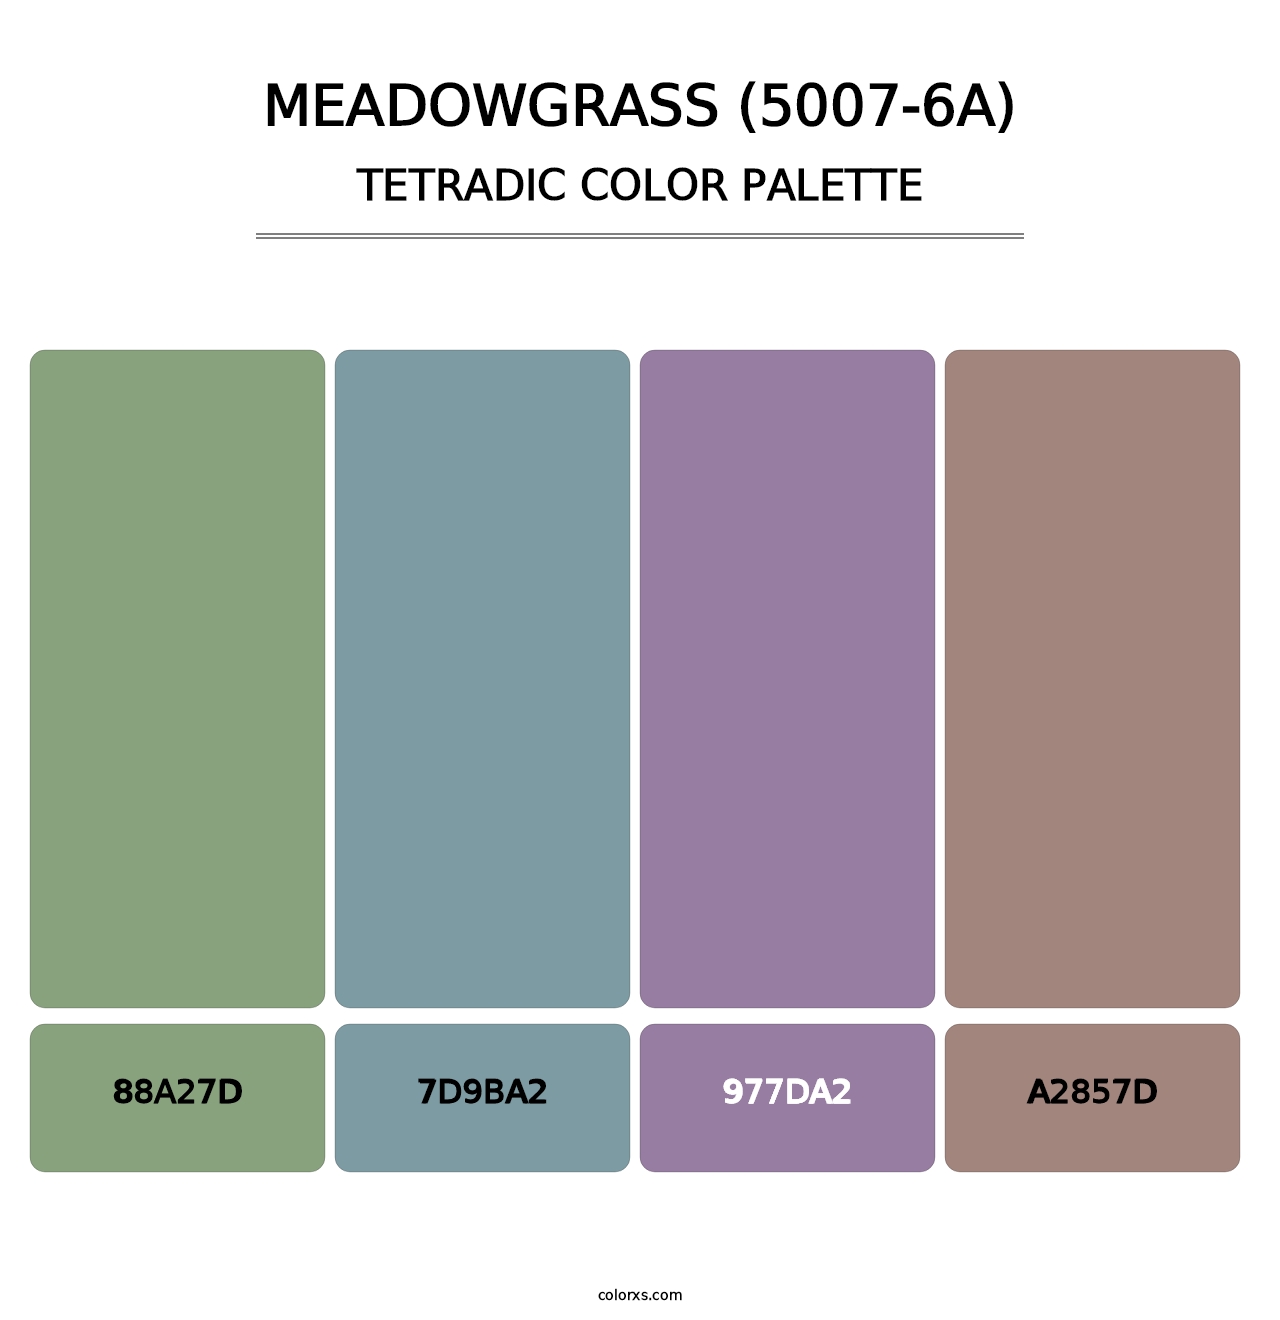 Meadowgrass (5007-6A) - Tetradic Color Palette